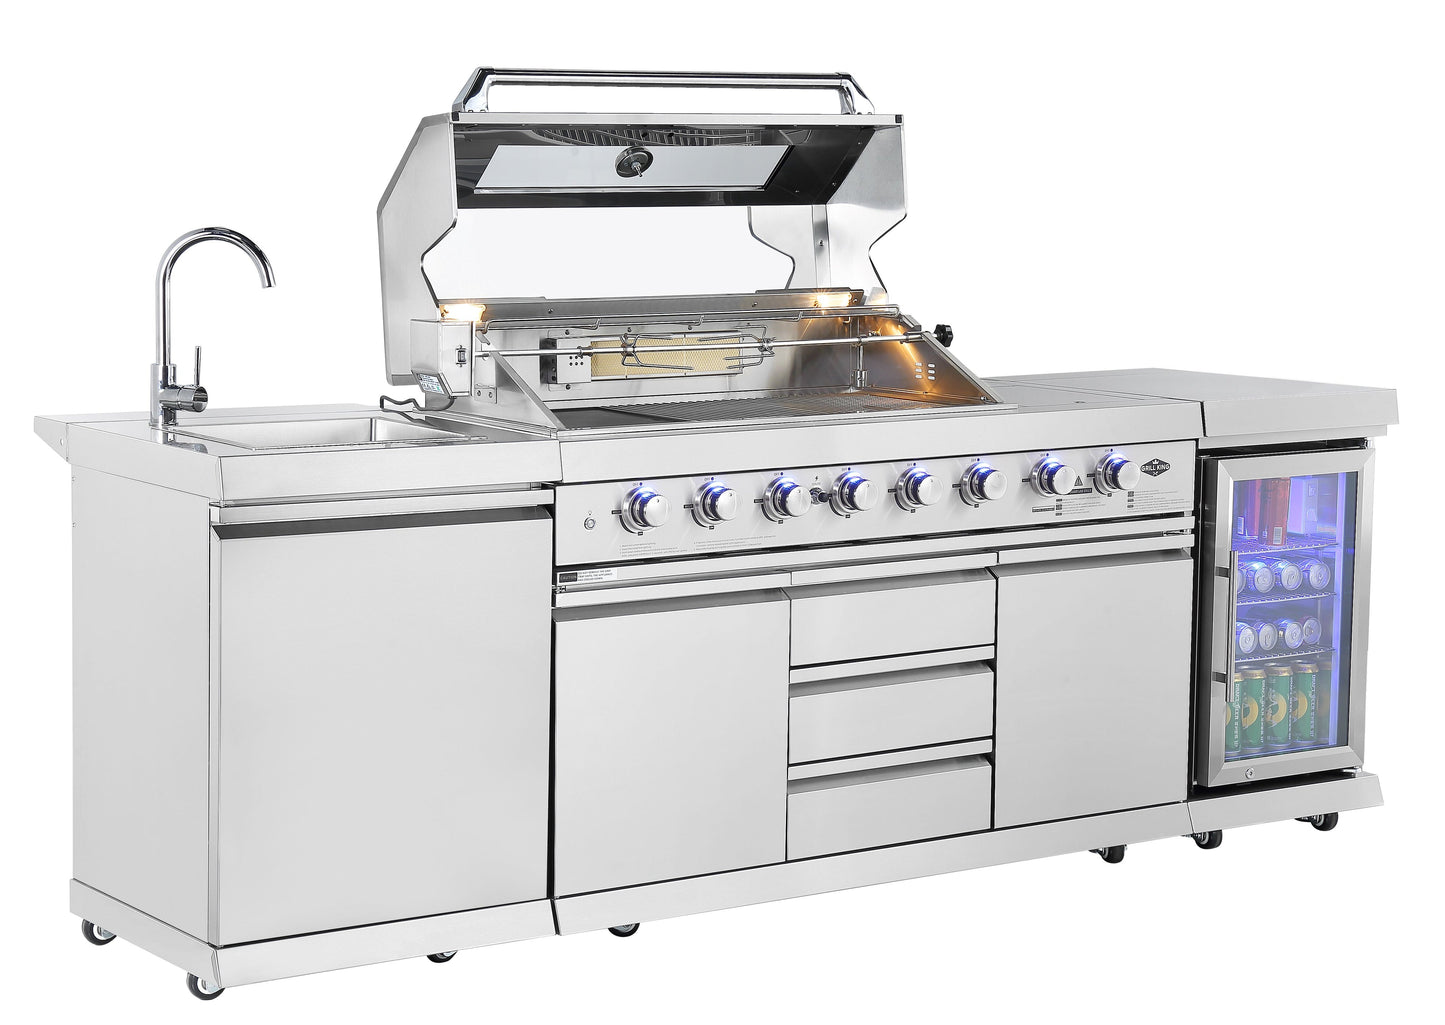 Hurricane 6-Burner Outdoor BBQ Kitchen + 188L Kegerator : Stainless Steel, Fridge, Sink, Height Adjustable, Rotisserie with BBQ Cover